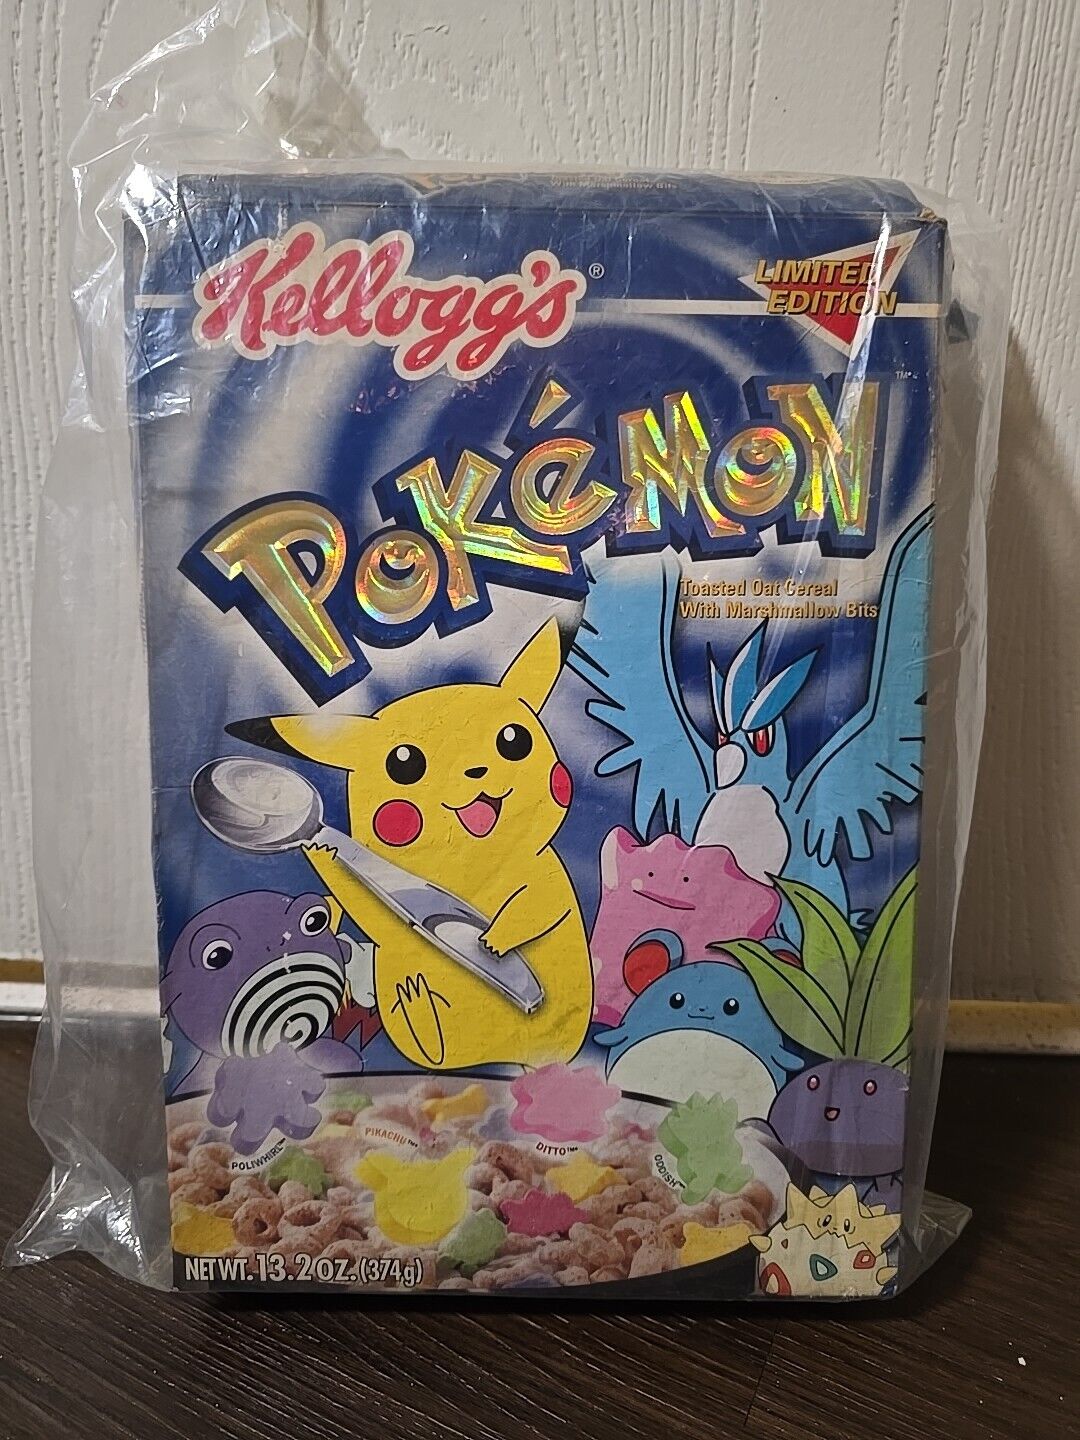 Vintage Kellogg’s Pokémon Foil Cereal Box 2000 Limited Edition Collector's Item